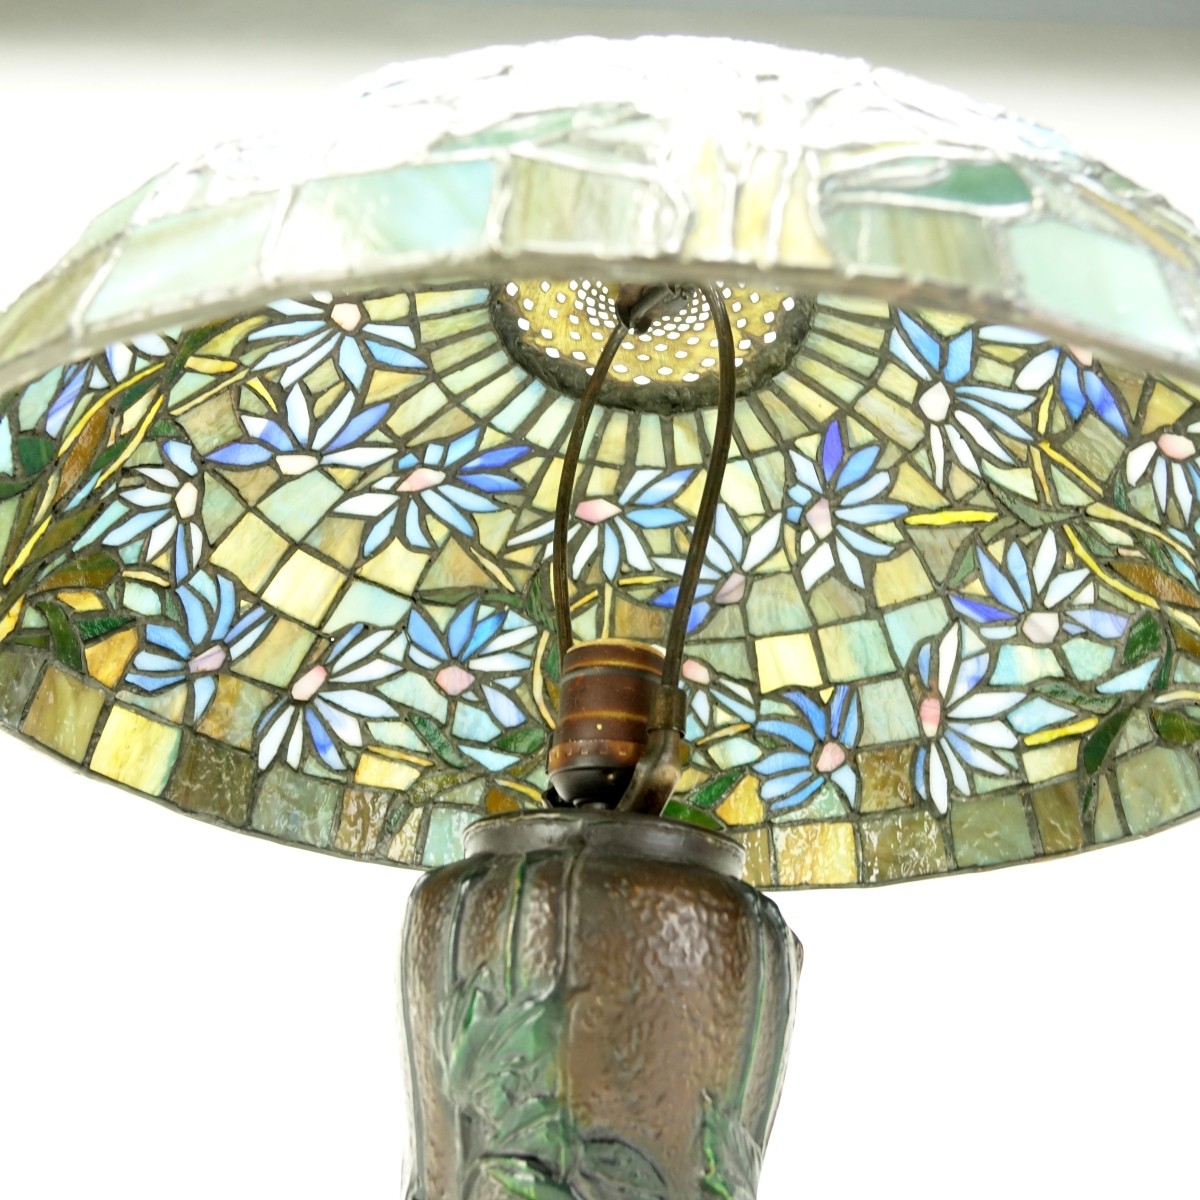 Tiffany Style Lamp with Shade